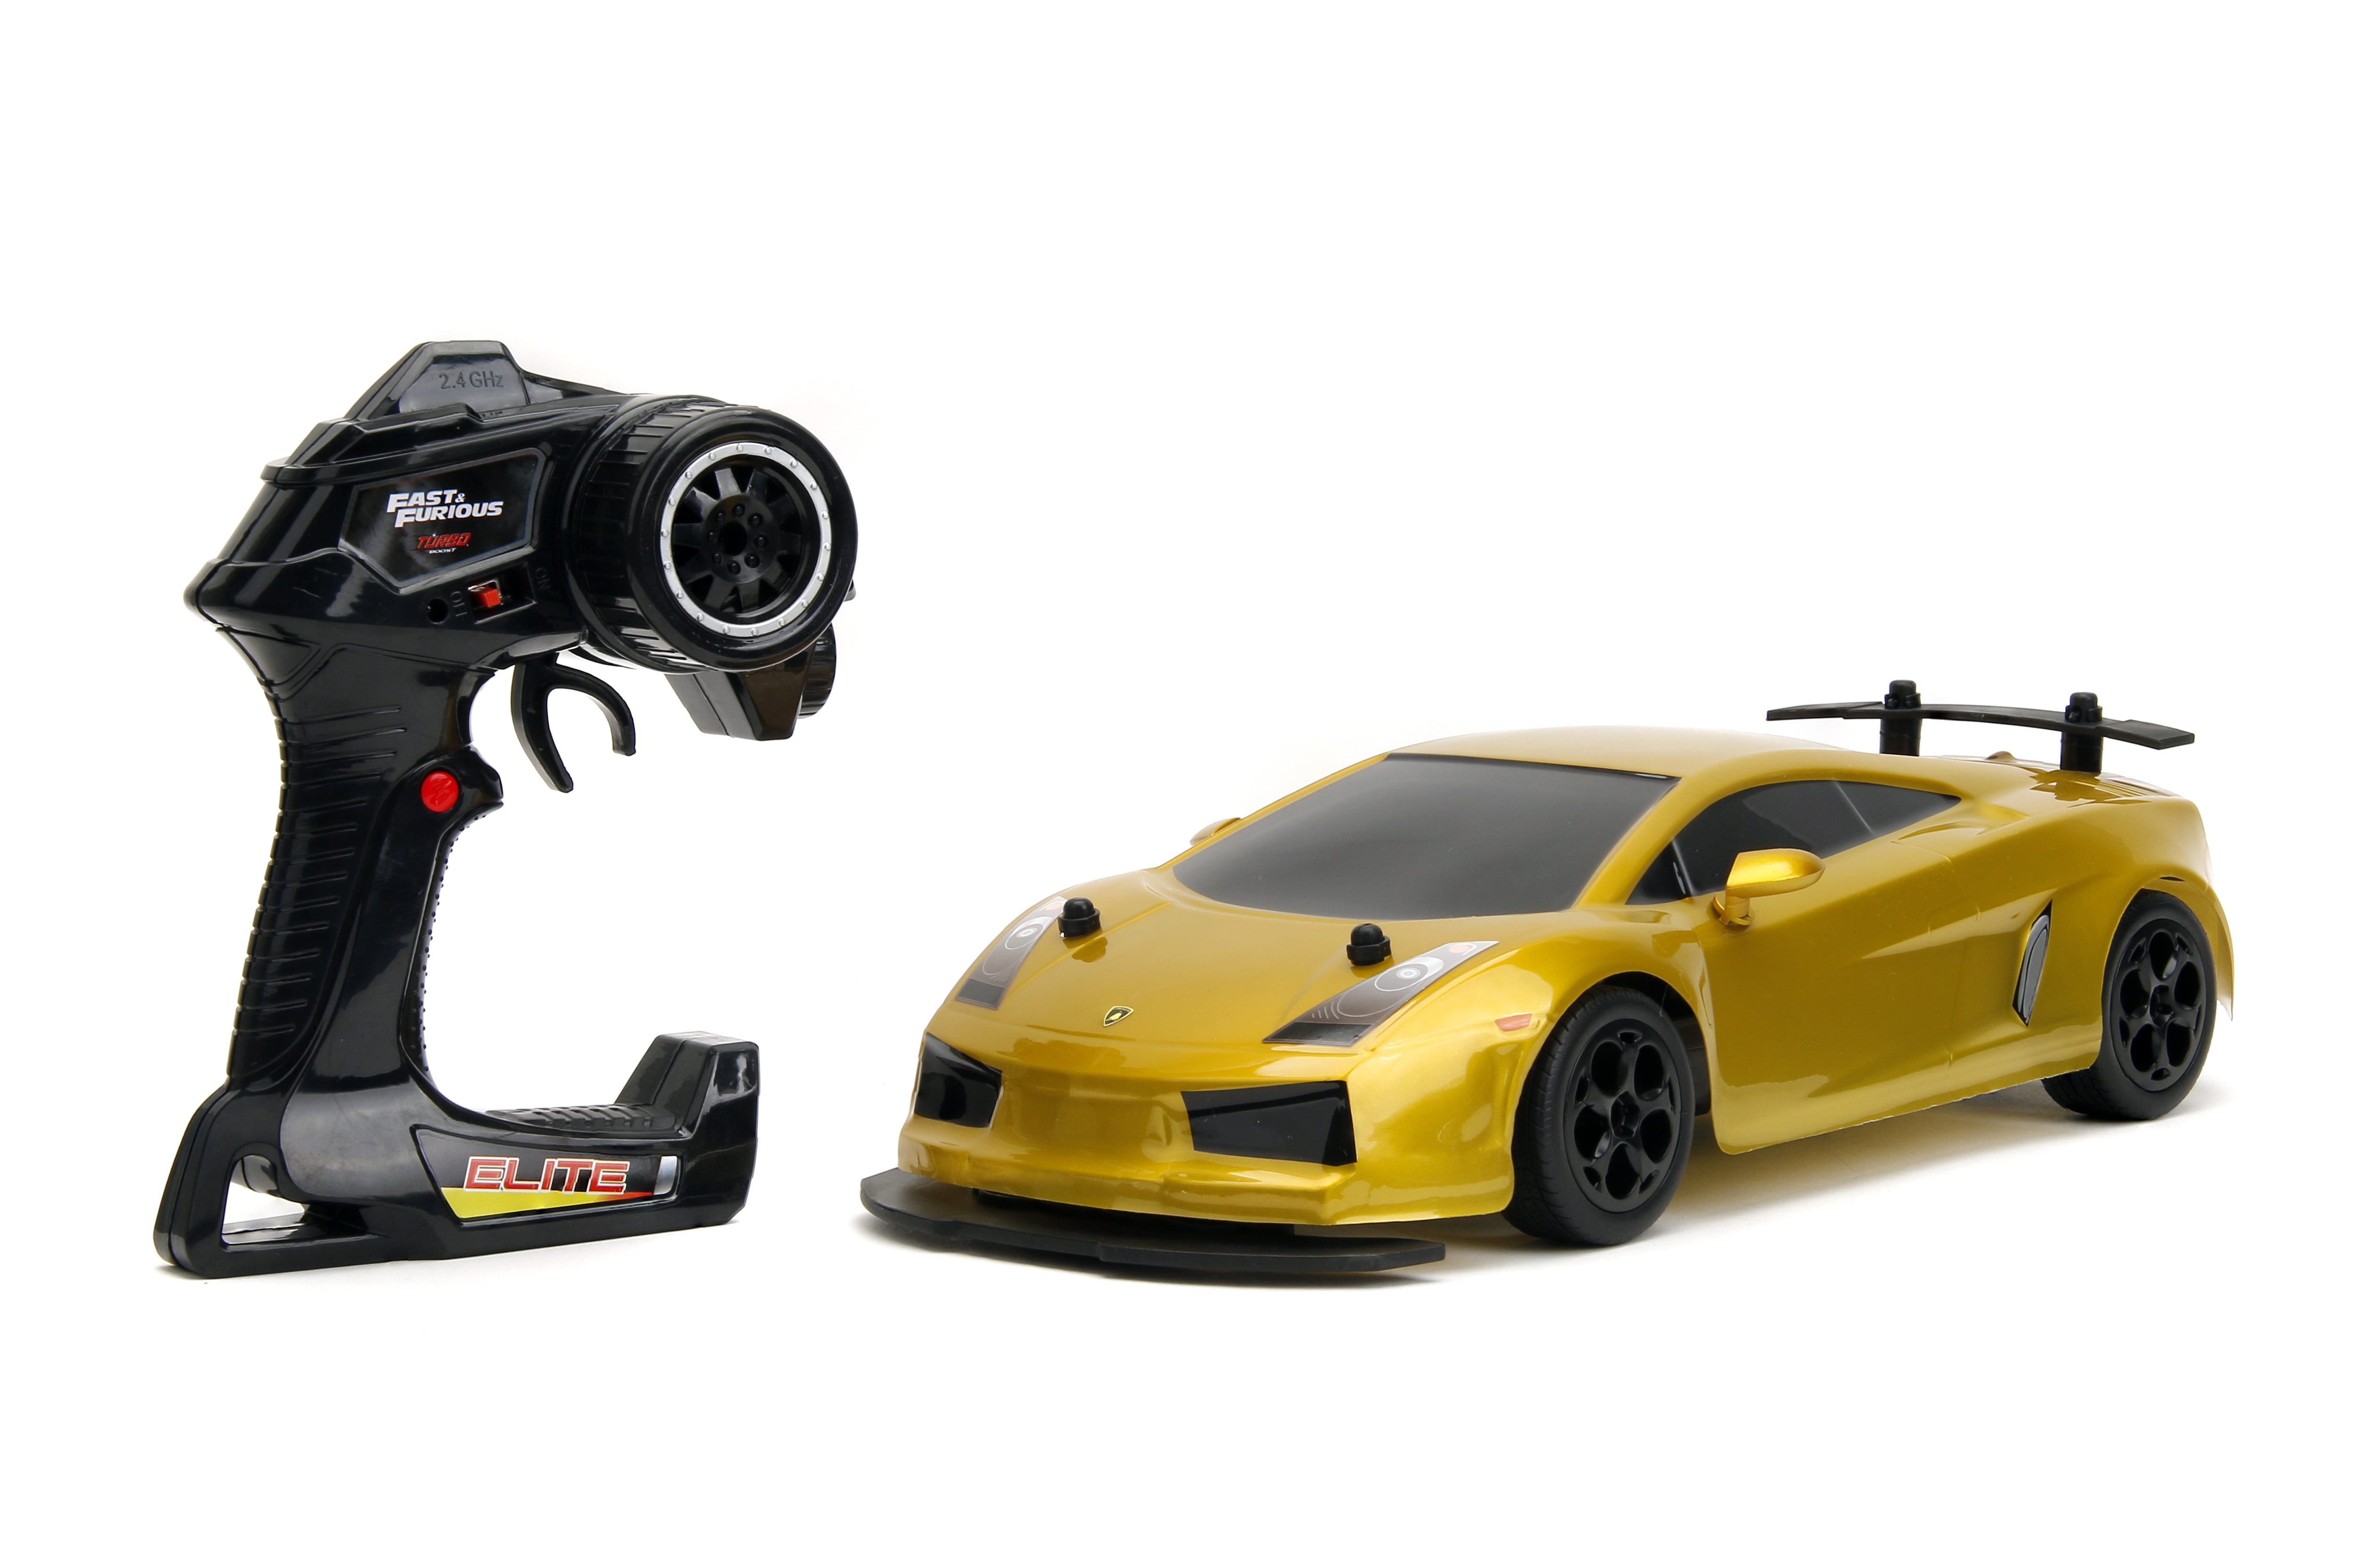 Fast & Furious 1:12 Gold Lamborghini RC Radio Control Cars Play Vehicles